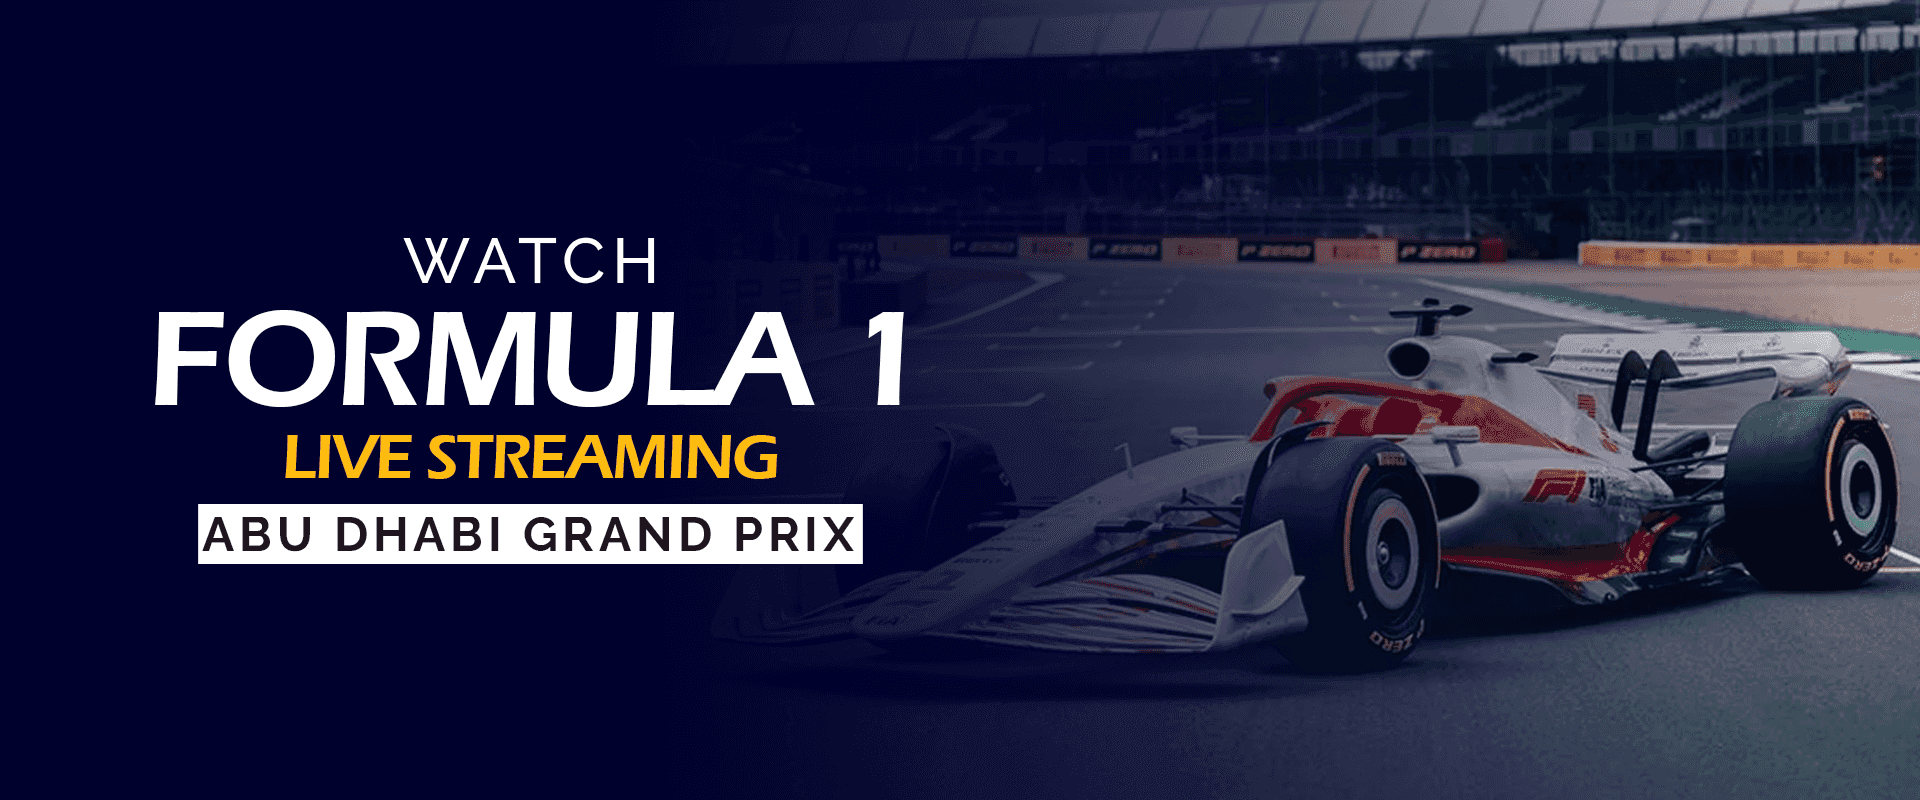 Watch Formula 1 Live Streaming – Abu Dhabi Grand Prix